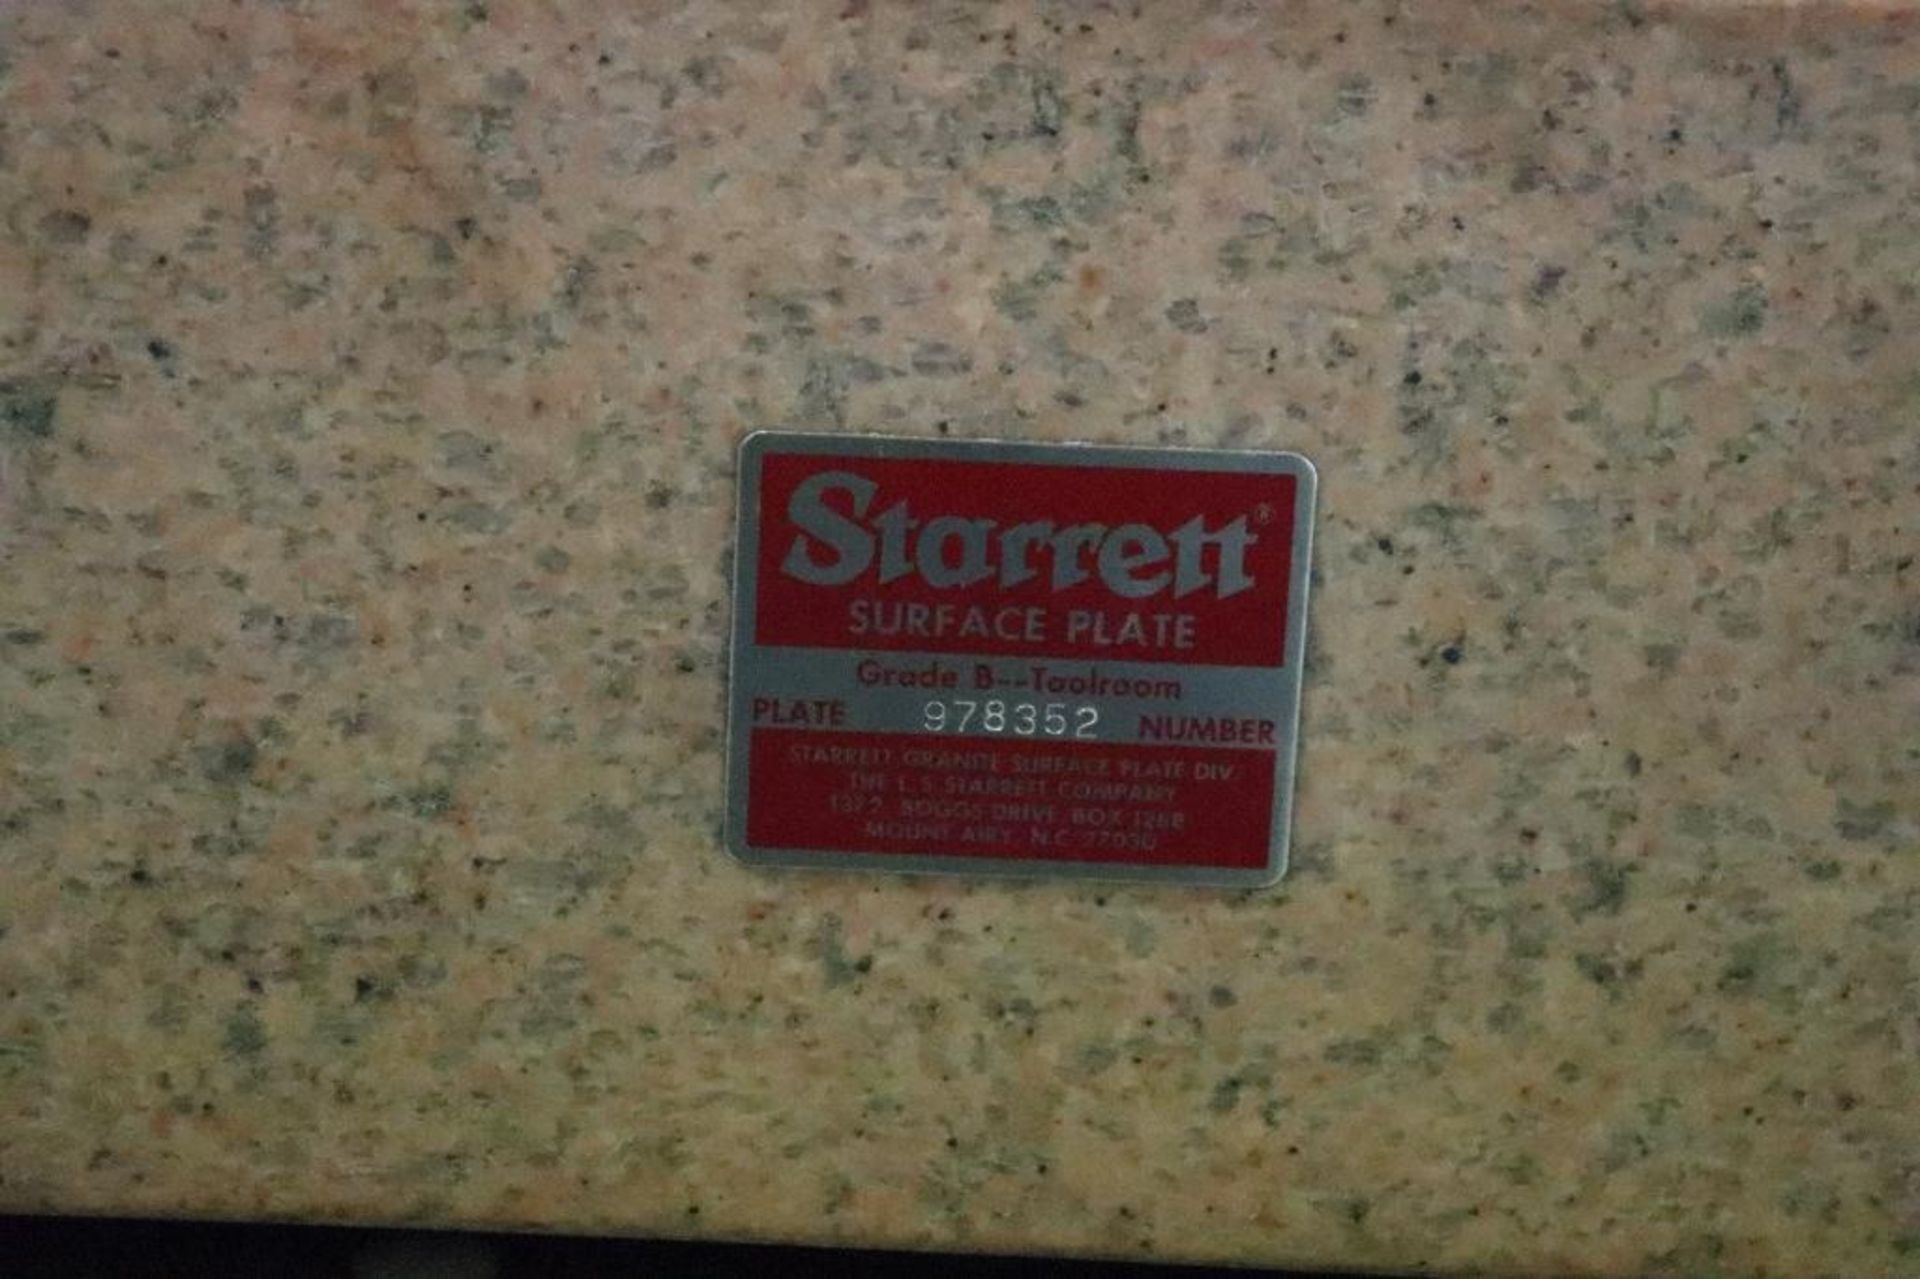 Starrett surface plate 2' x 3' x 6" - Image 5 of 9